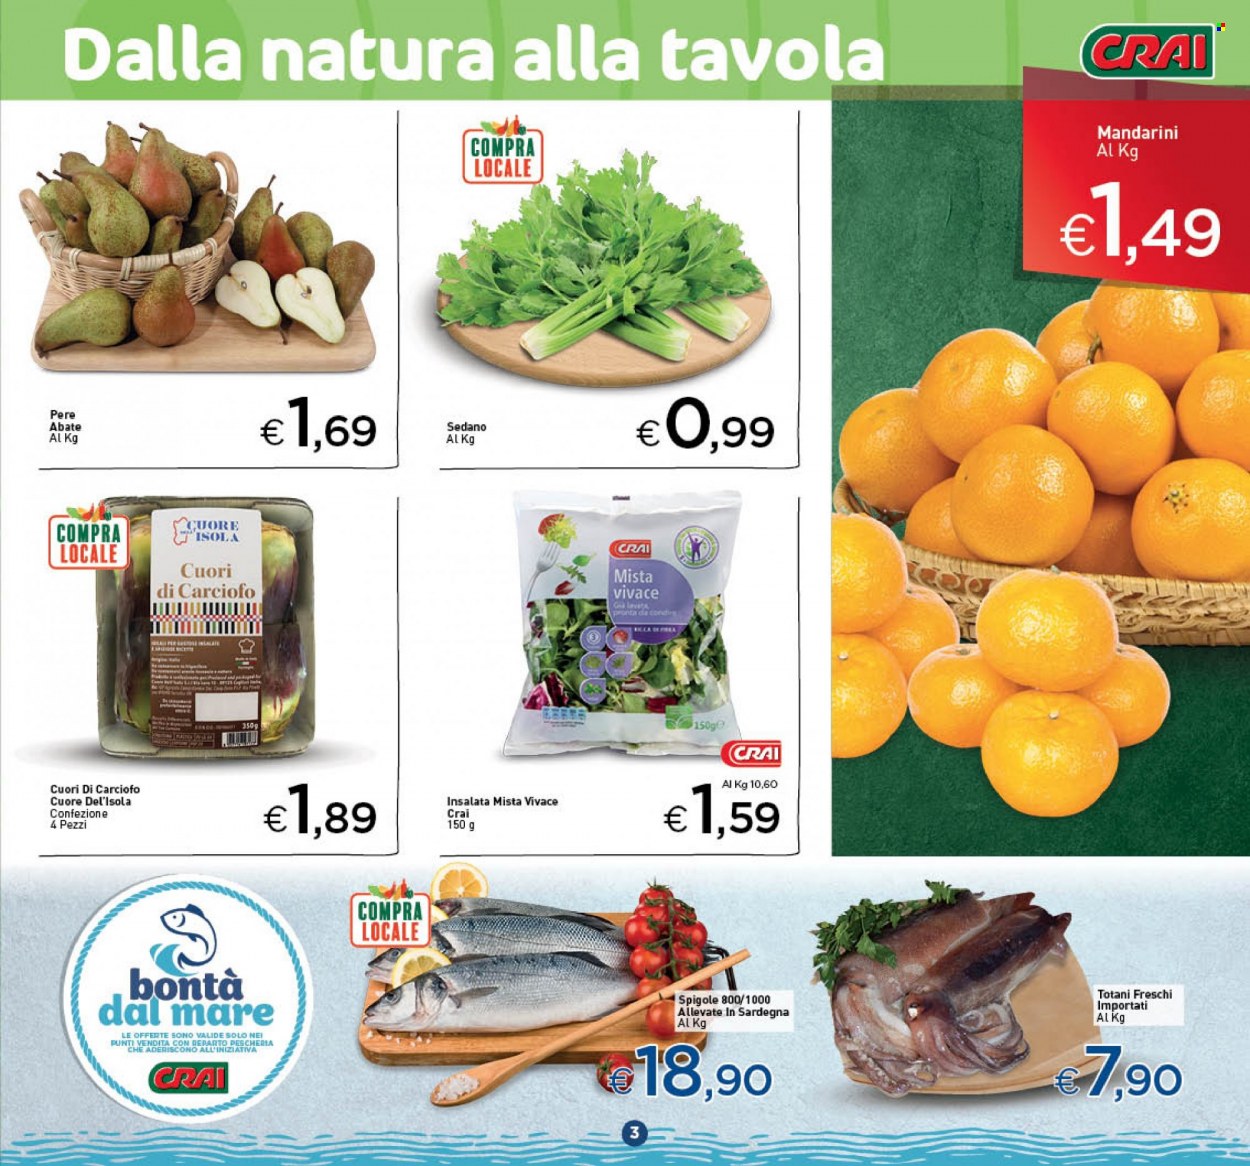 thumbnail - Volantino CRAI - 26/1/2023 - 8/2/2023 - Prodotti in offerta - insalata mista, sedano, pere, mandarini, spigola, totani. Pagina 3.